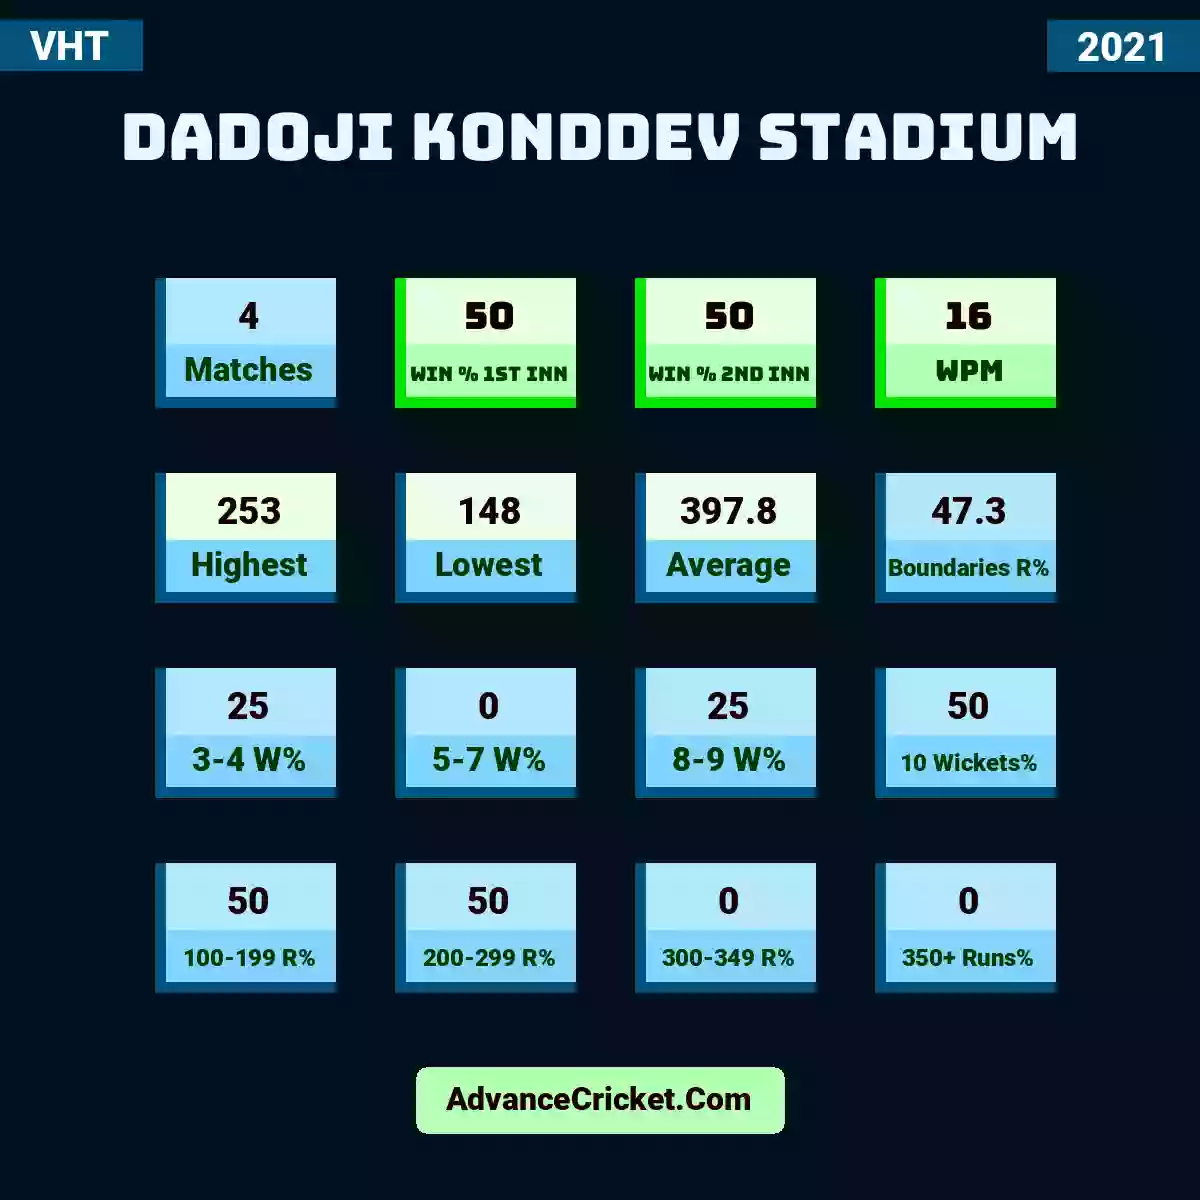 Image showing Dadoji Konddev Stadium with Matches: 4, Win % 1st Inn: 50, Win % 2nd Inn: 50, WPM: 16, Highest: 253, Lowest: 148, Average: 397.8, Boundaries R%: 47.3, 3-4 W%: 25, 5-7 W%: 0, 8-9 W%: 25, 10 Wickets%: 50, 100-199 R%: 50, 200-299 R%: 50, 300-349 R%: 0, 350+ Runs%: 0.